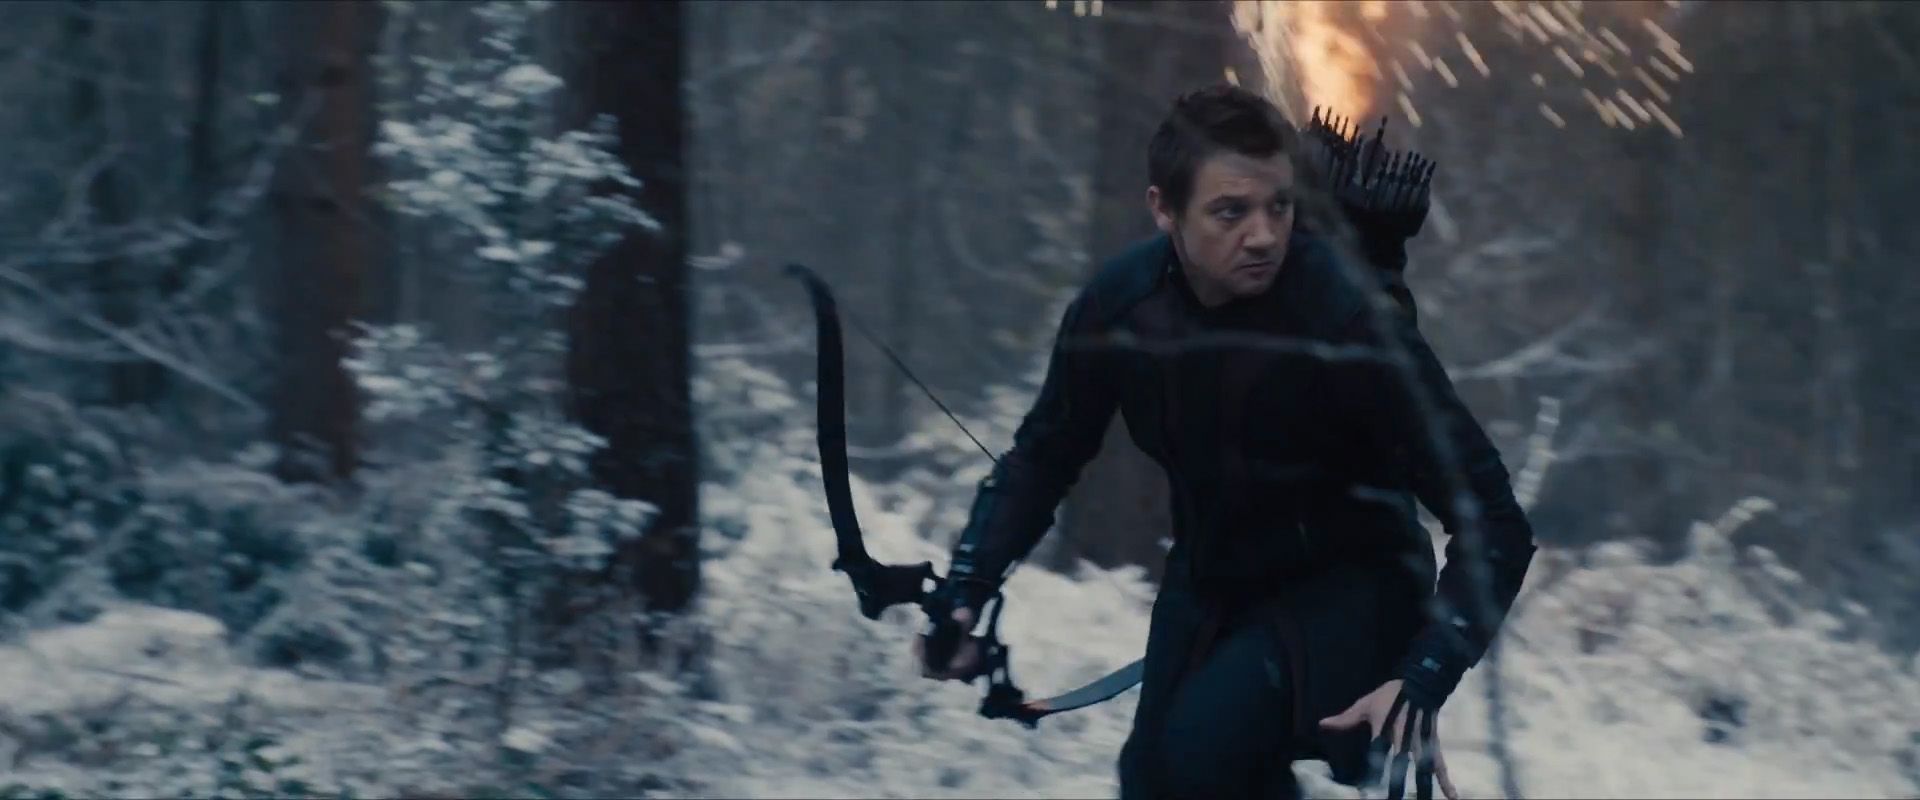 Avengers: Age of Ultron Trailer 1 - Hawkeye in Snow